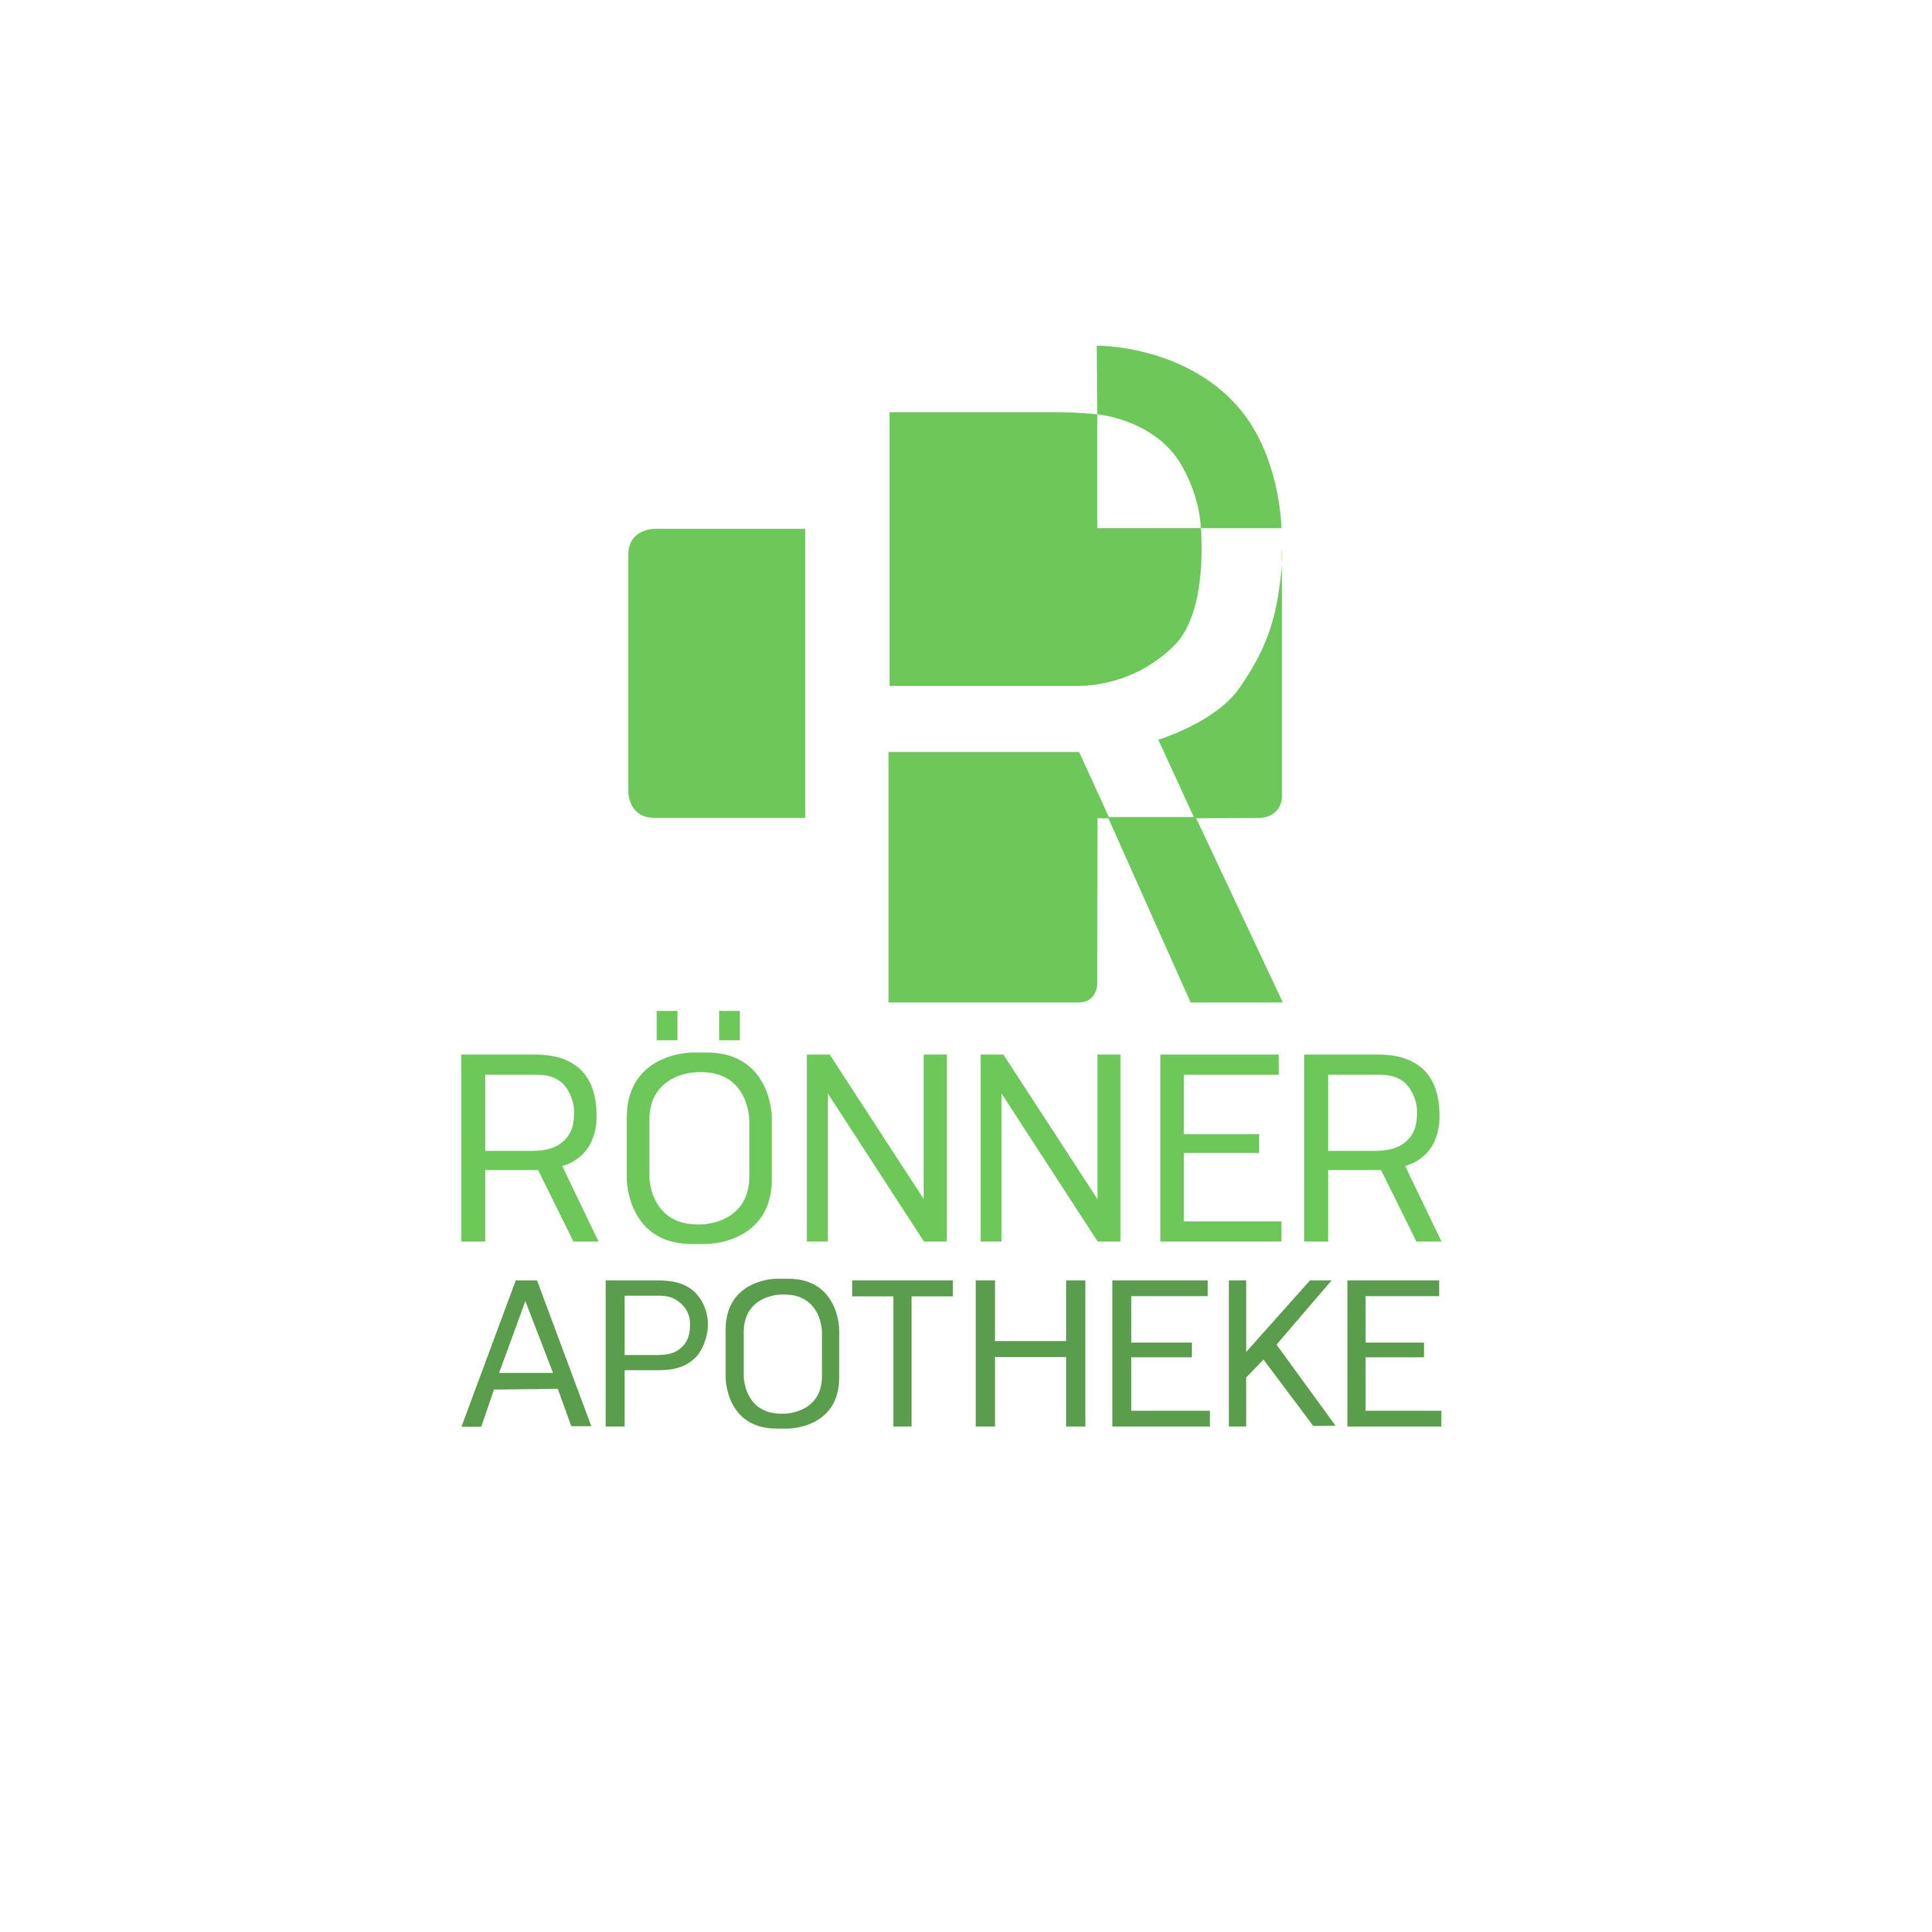 Rönner Apotheke im Marktkauf Bünde Logo